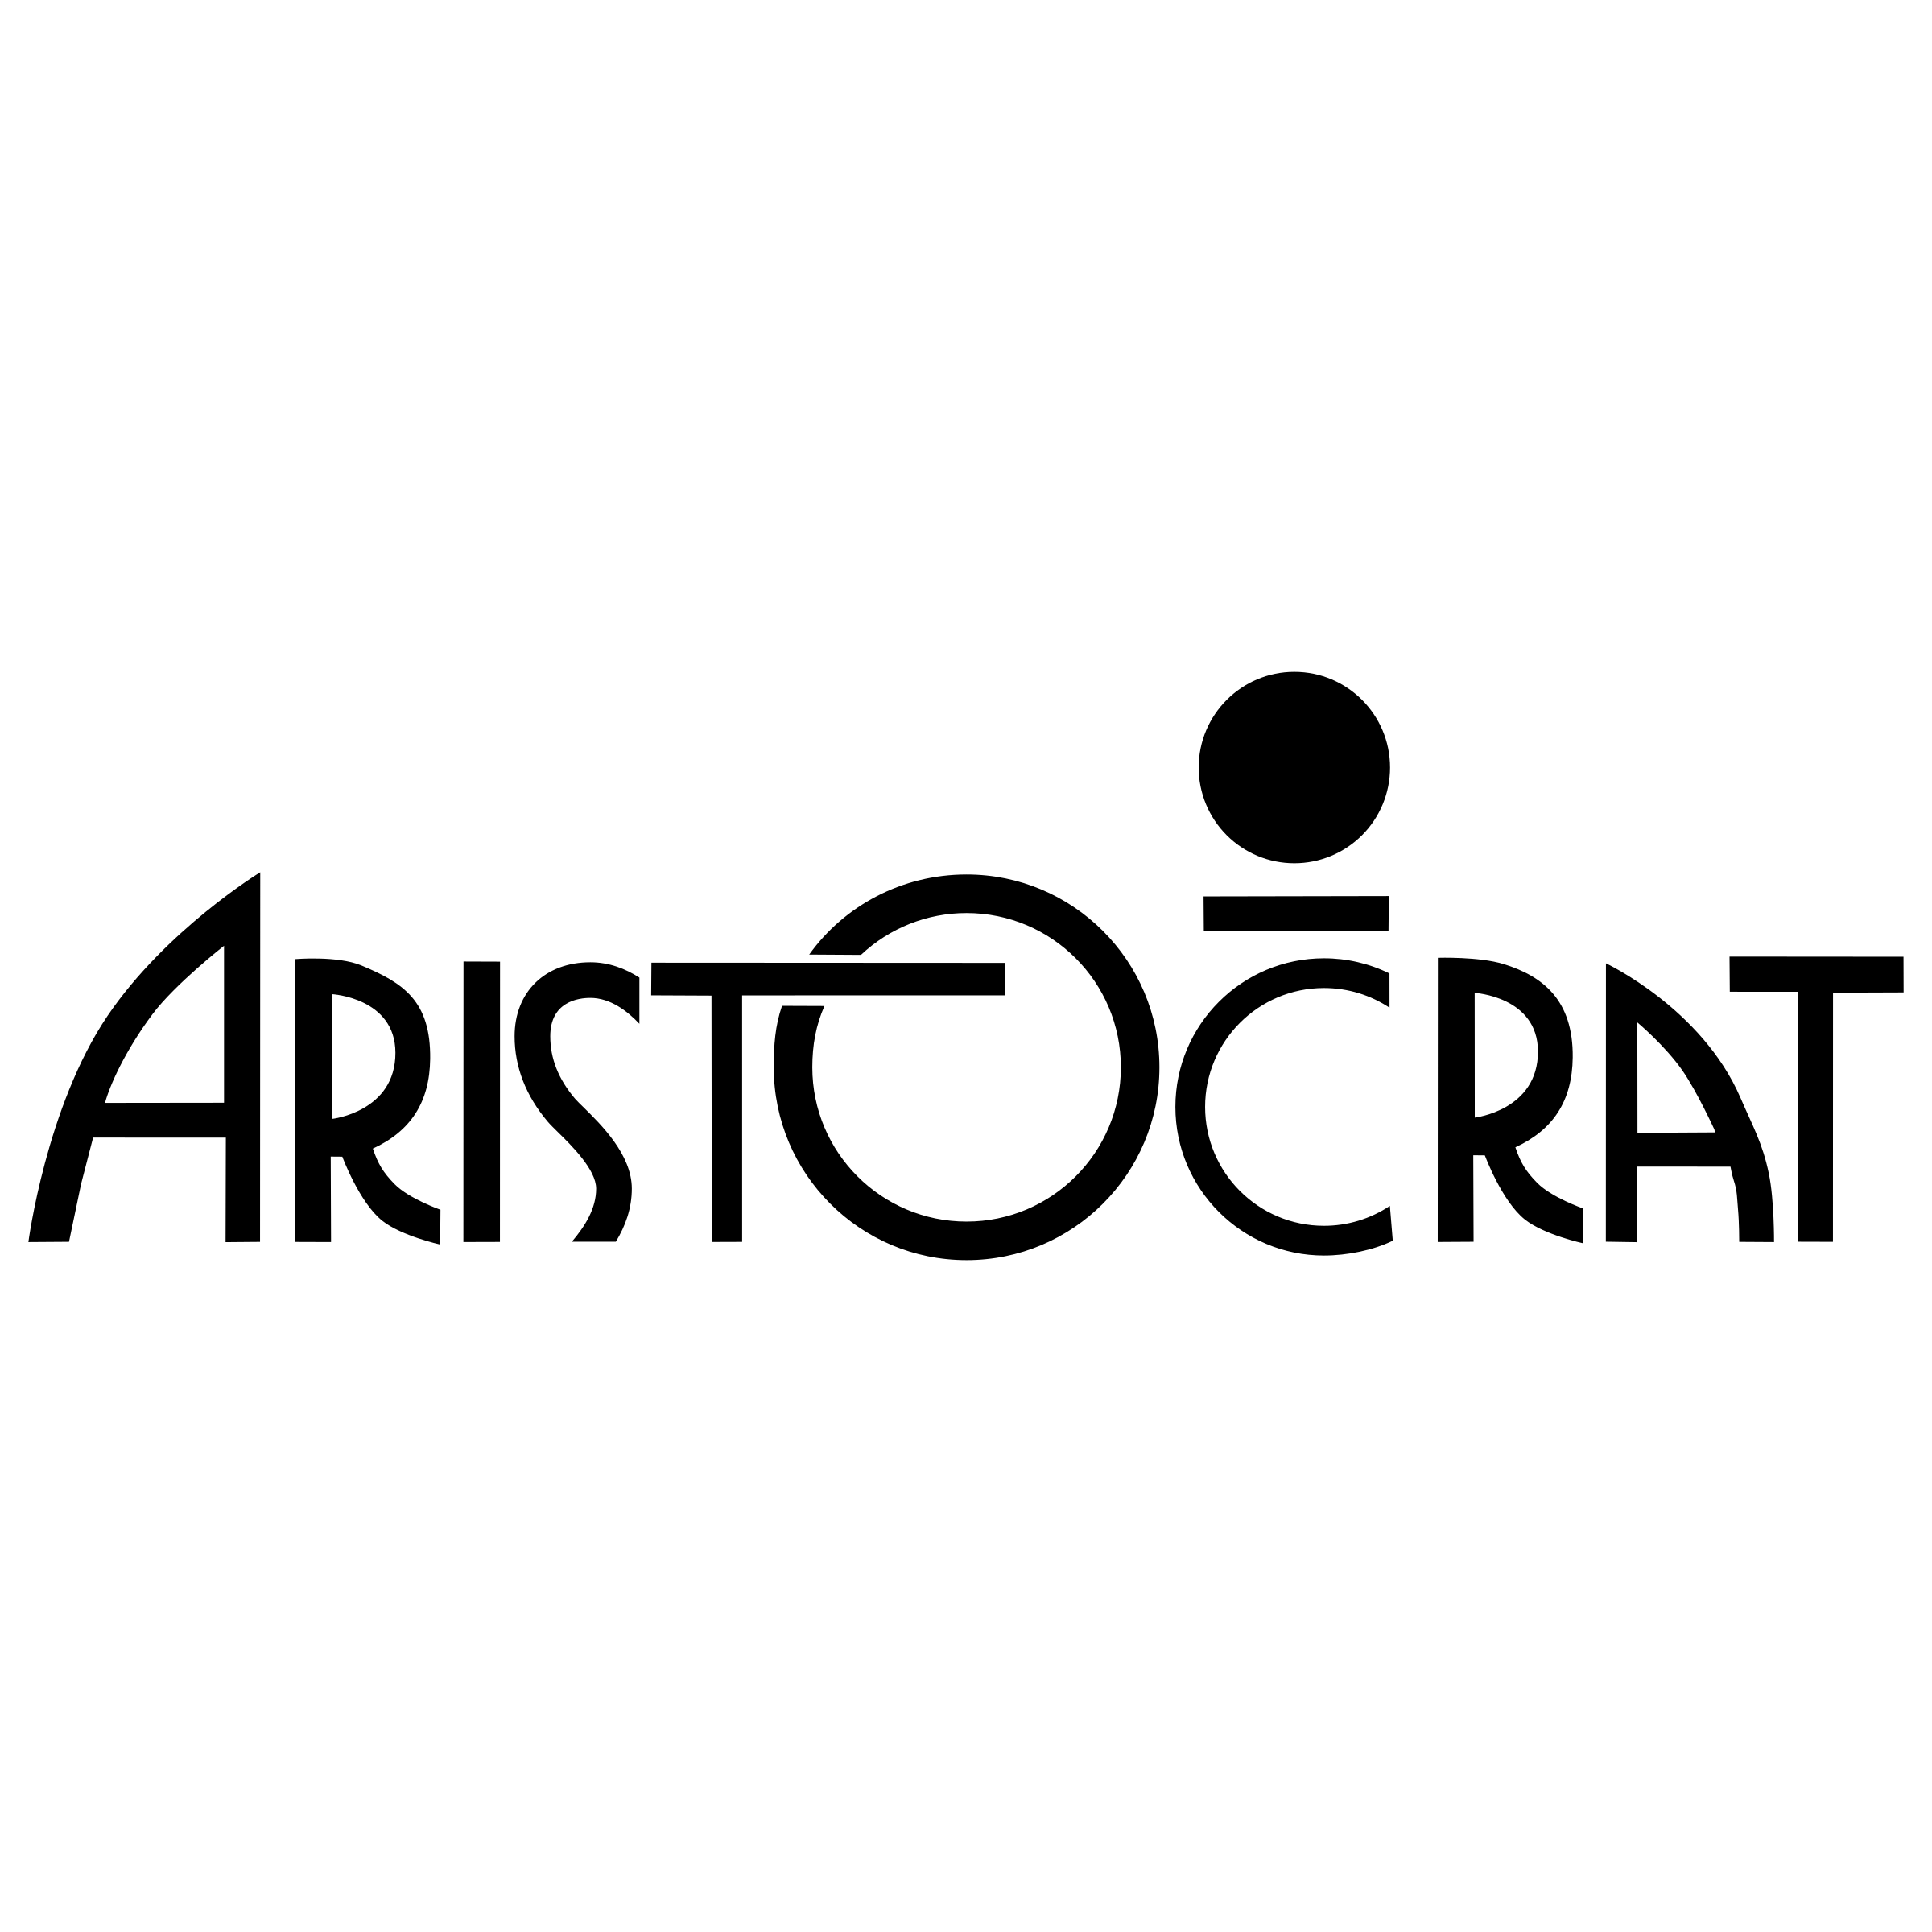 Aristocrat Logo - Aristocrat Logo PNG Transparent & SVG Vector - Freebie Supply